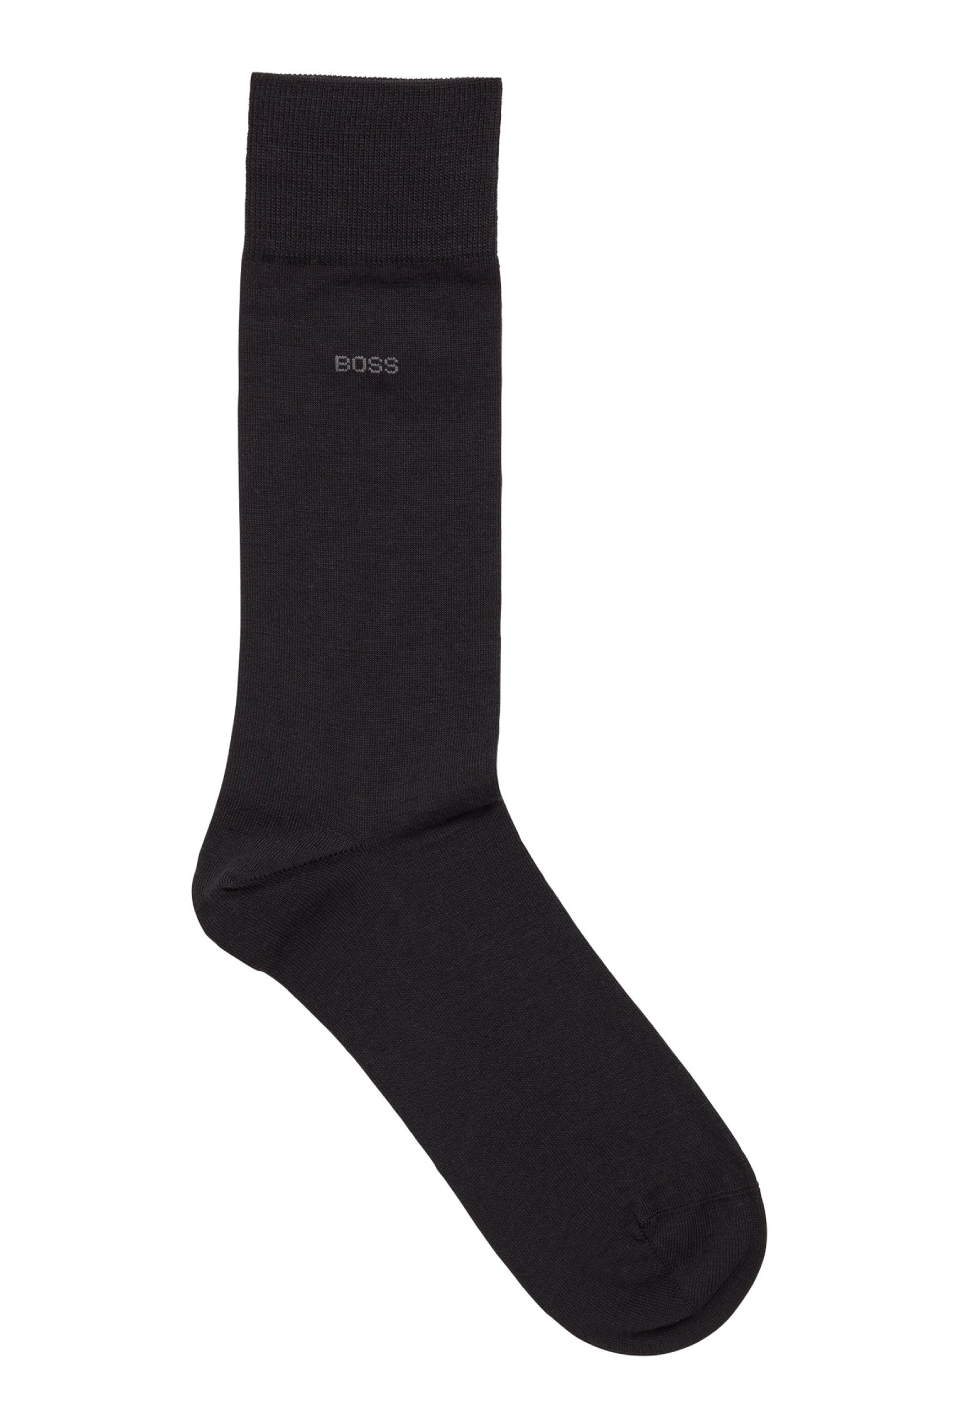 BOSS Edward Men's Socks